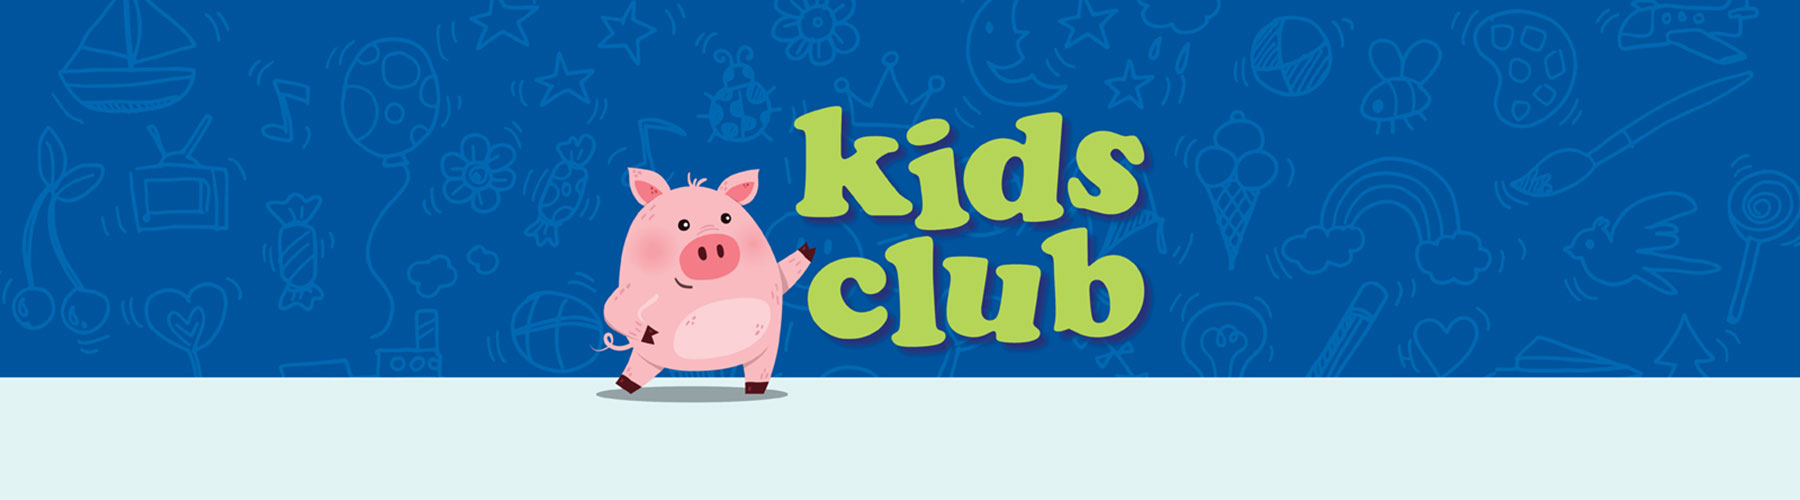 Cartoon Pig point to Kids Club text